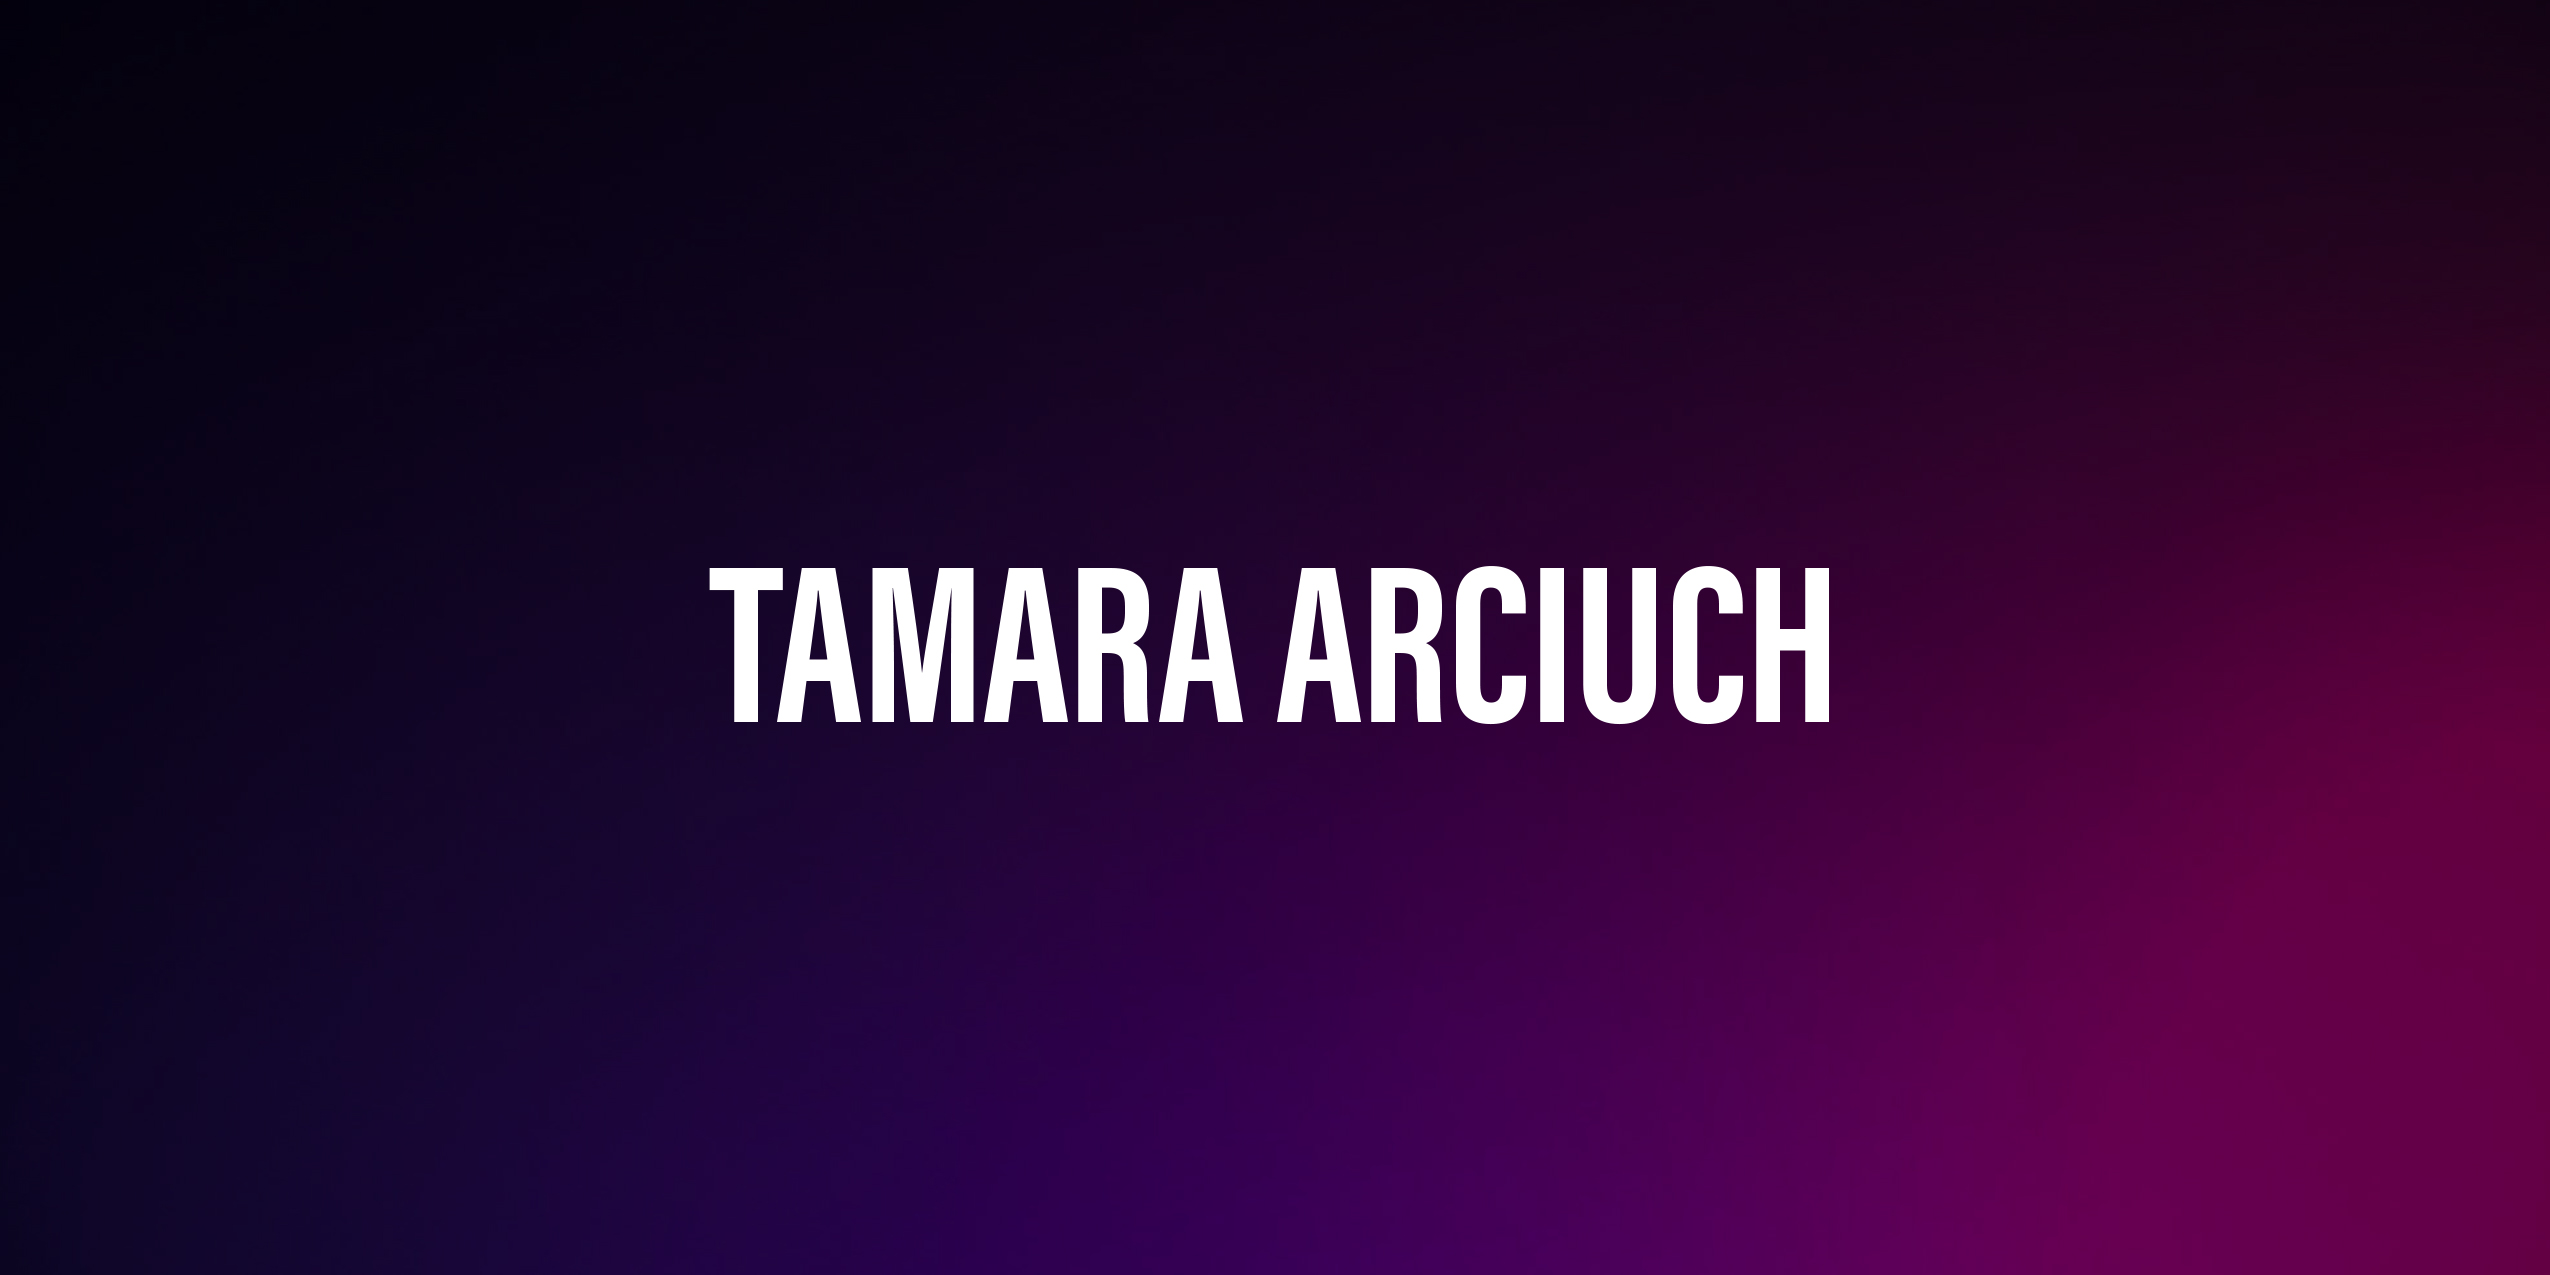 Tamara Arciuch – życiorys i filmografia